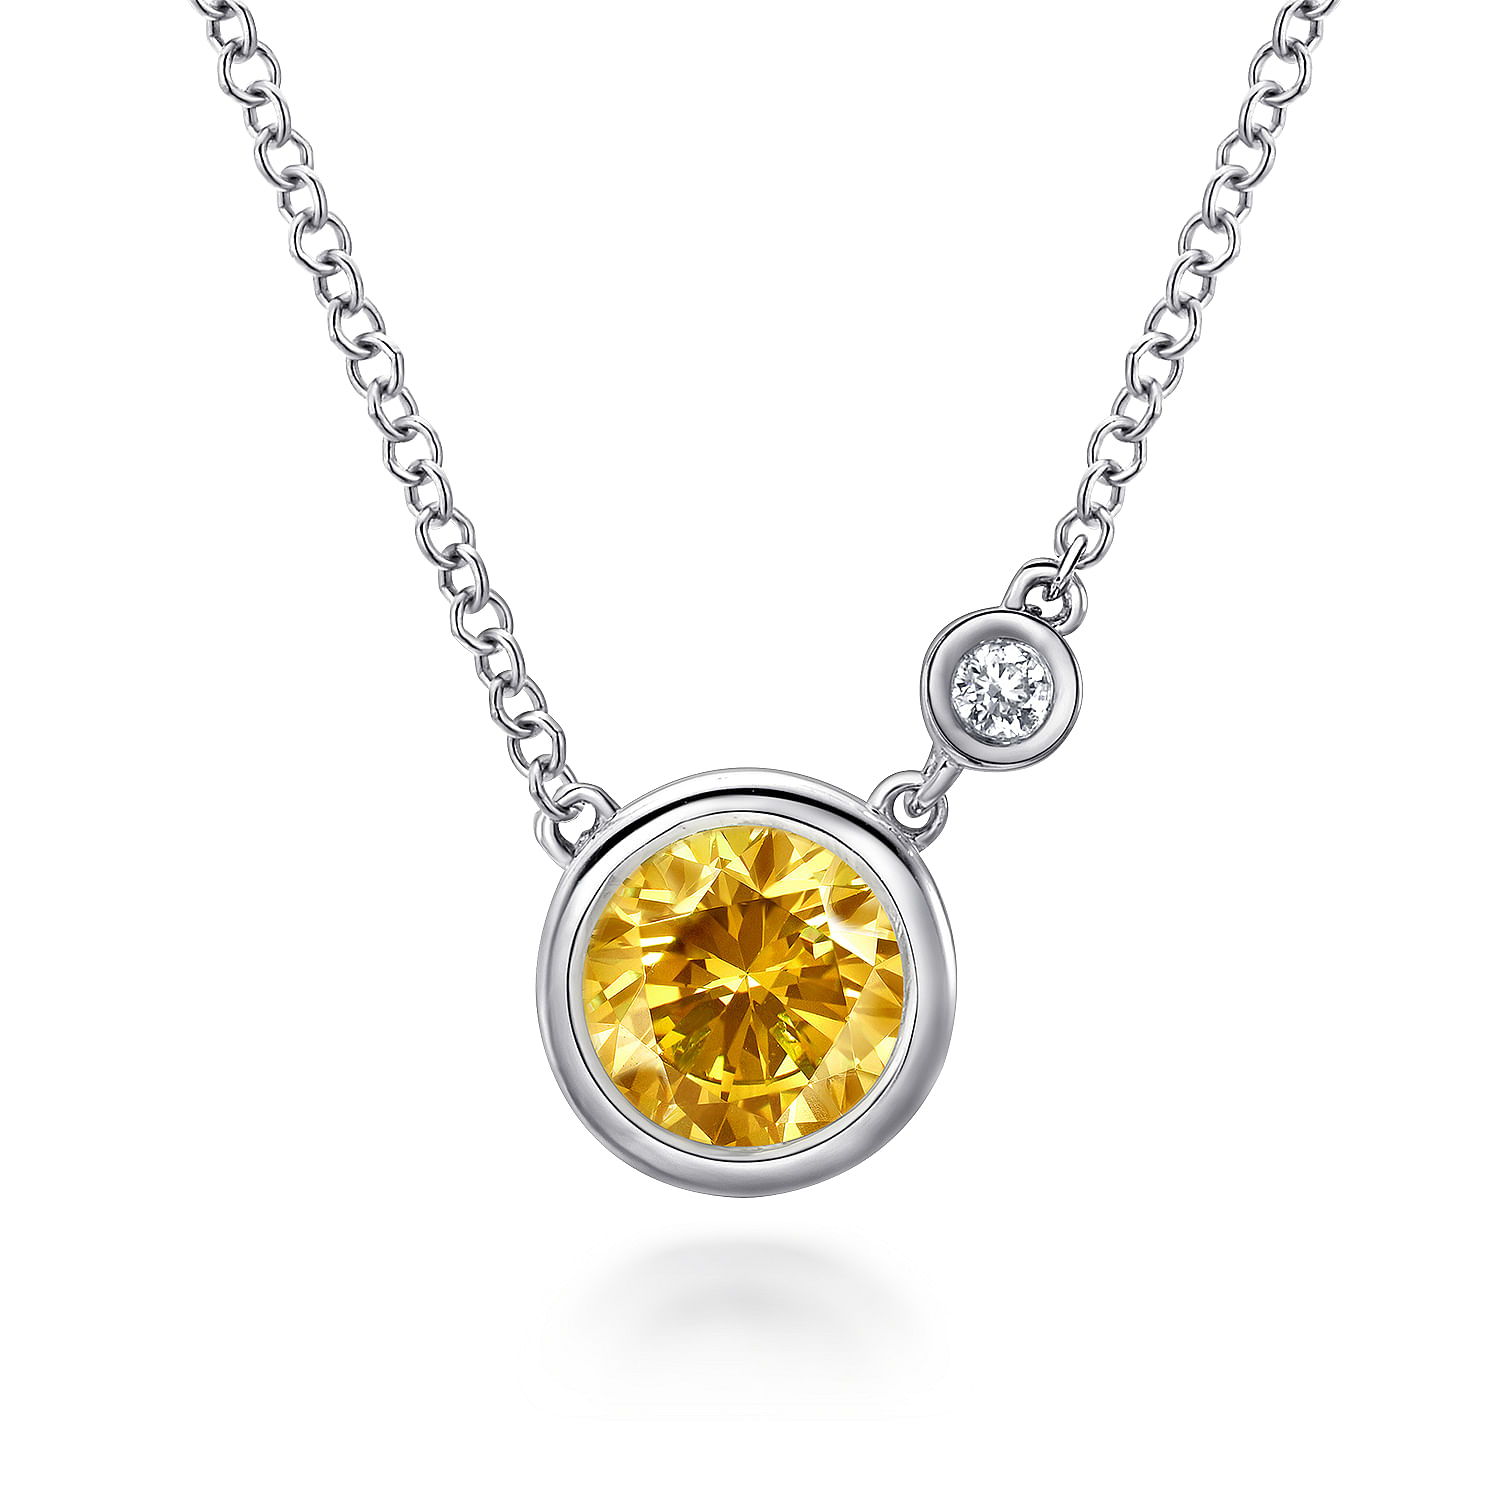 925 Sterling Silver Citrine and Diamond Pendant Necklace W Bezel Set